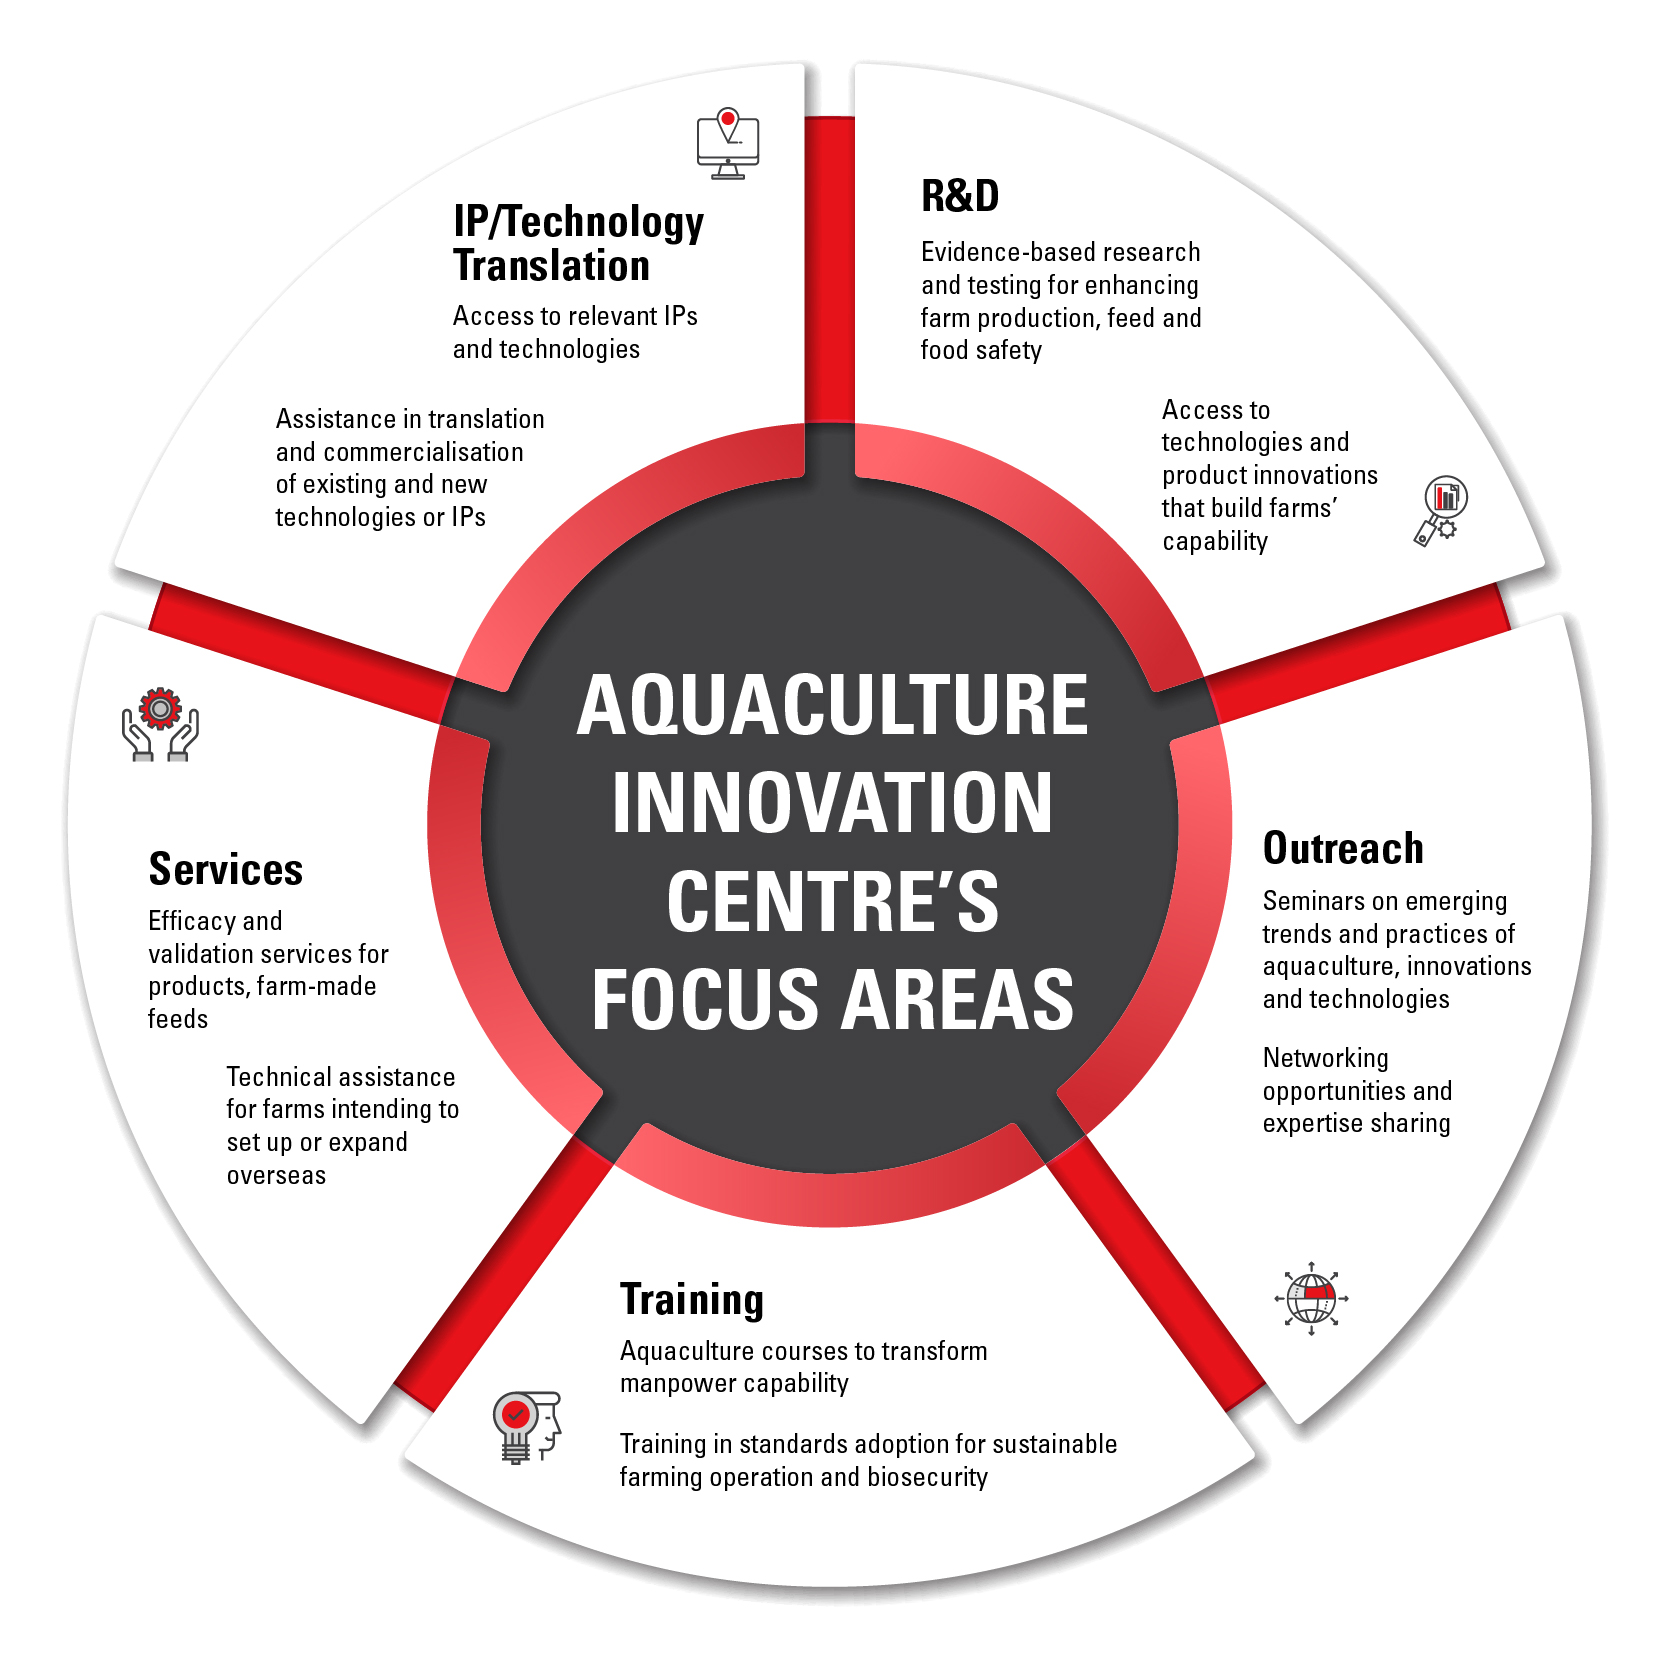 Agritech_Aquaculture_Innovation_Centre_Focus_Areas